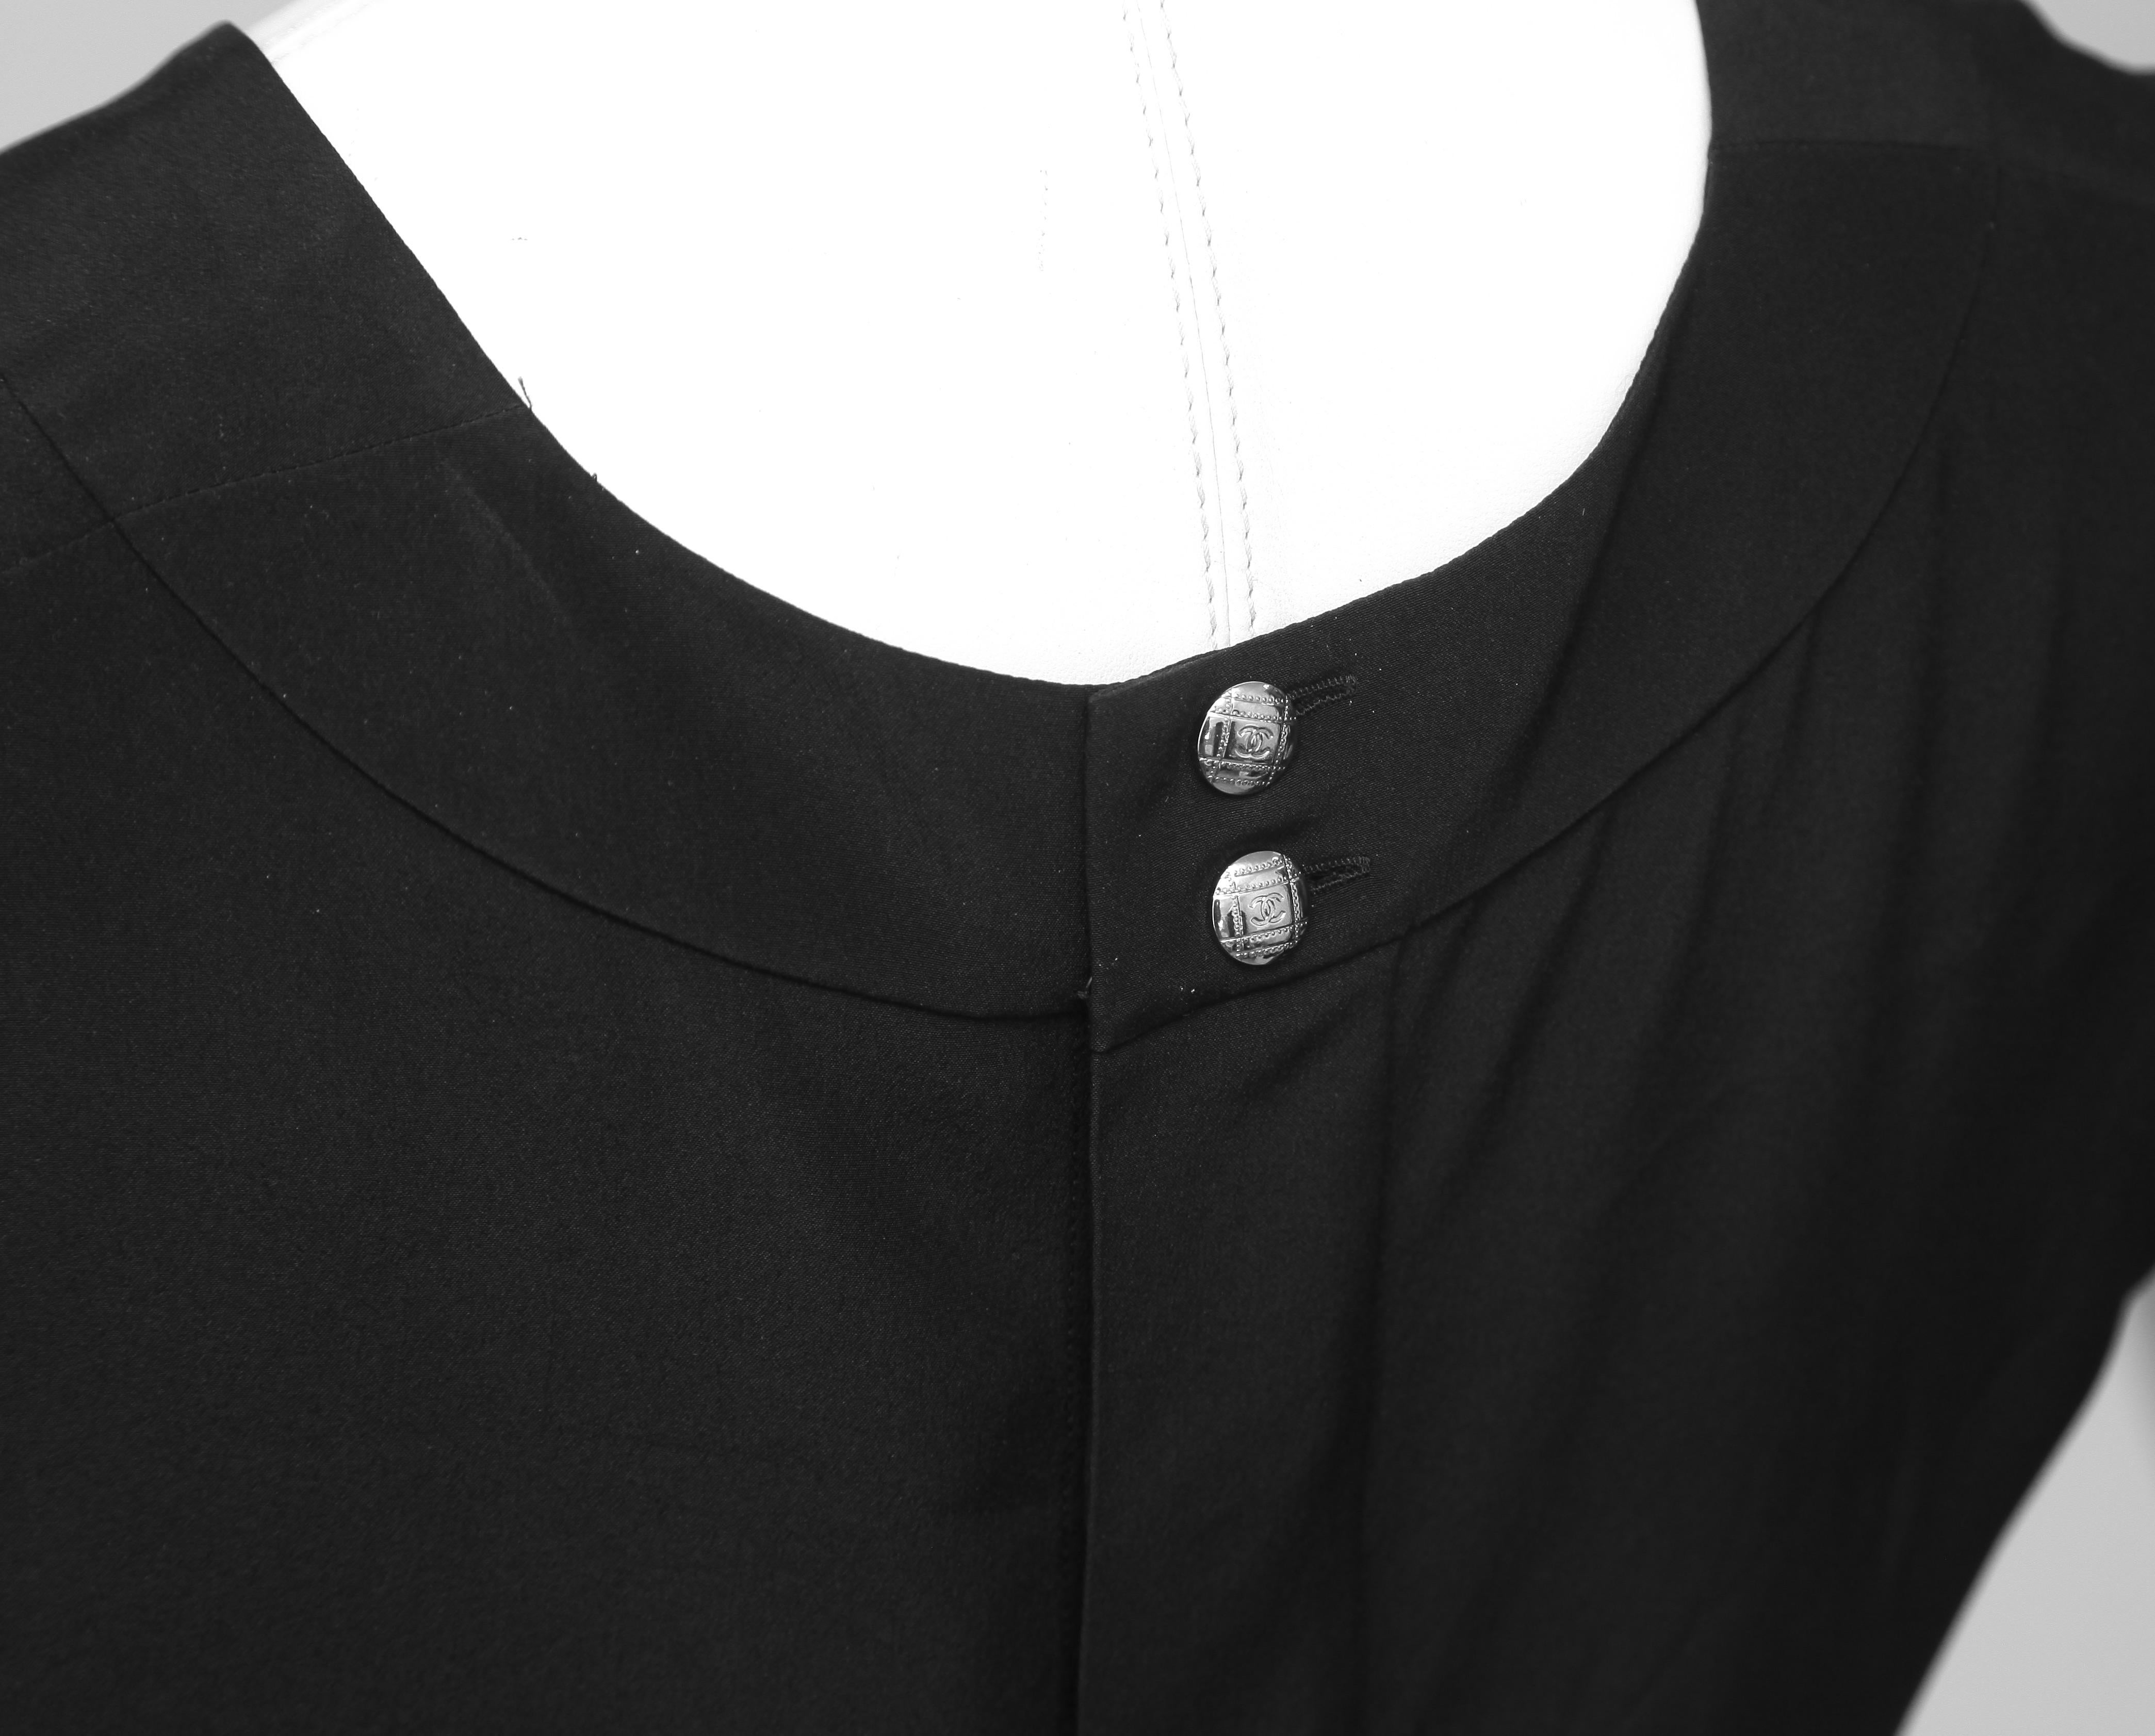 CHANEL Black Silk Blouse Sleeveless Top Shirt Pleats V-Neck Buttons Sz 36 For Sale 1